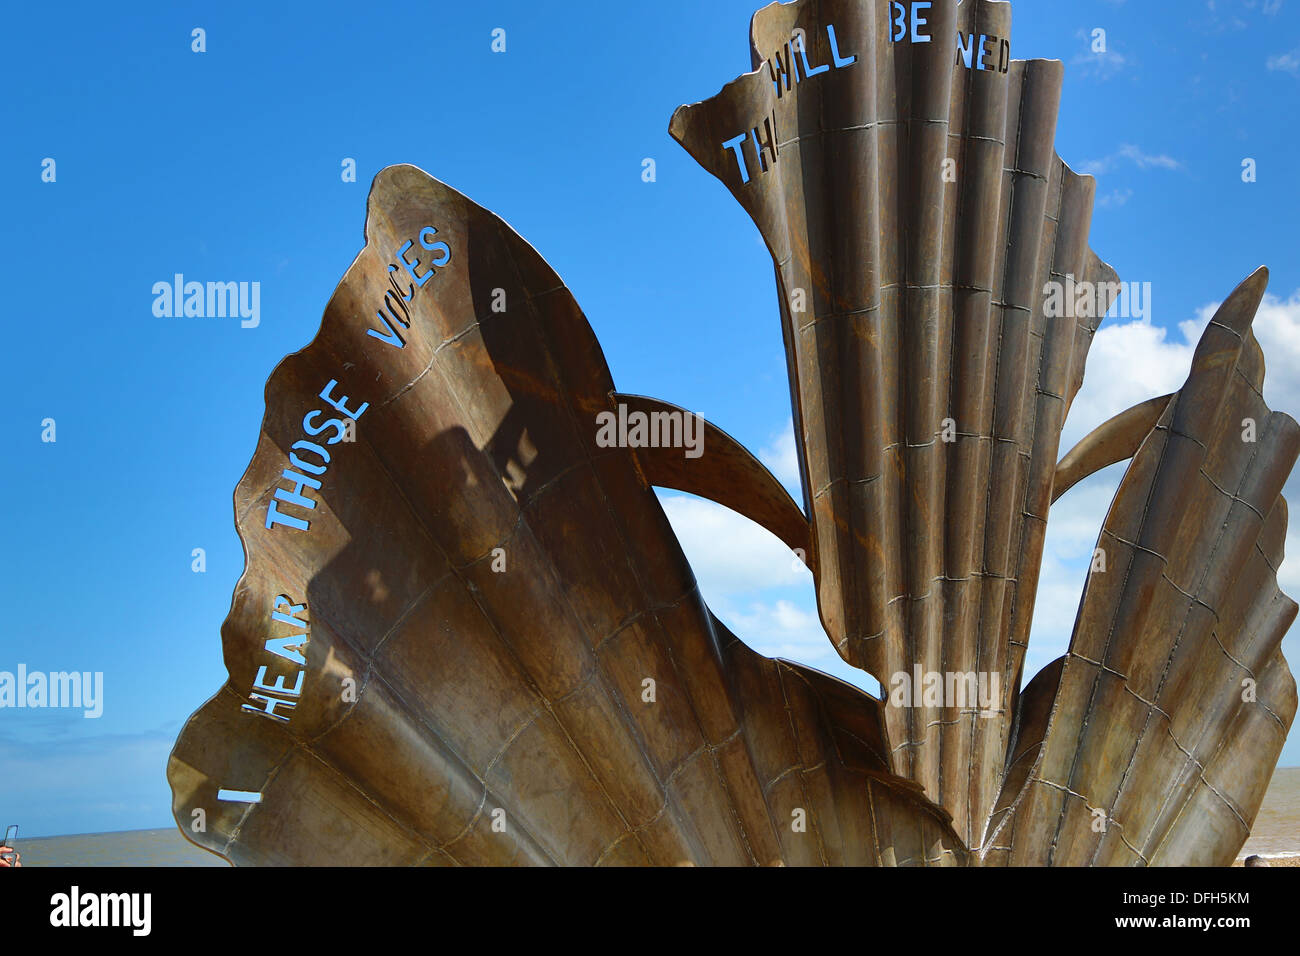 The Scallop modern sculpture on Aldeburgh beach Stock Photo